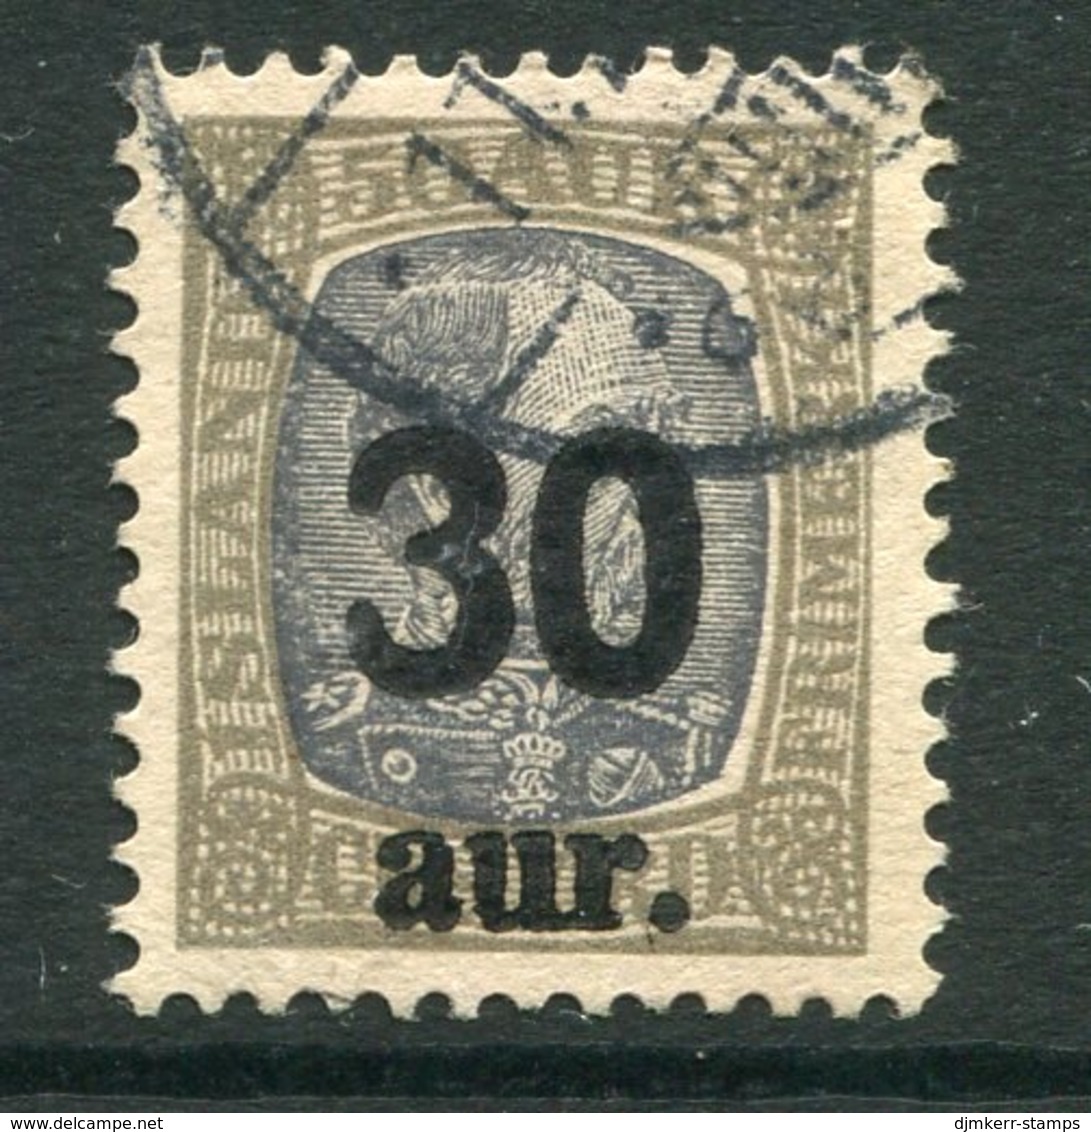 ICELAND 1925 30 Aur. On 50 Aur. Surcharge Used.  Michel 112 - Used Stamps